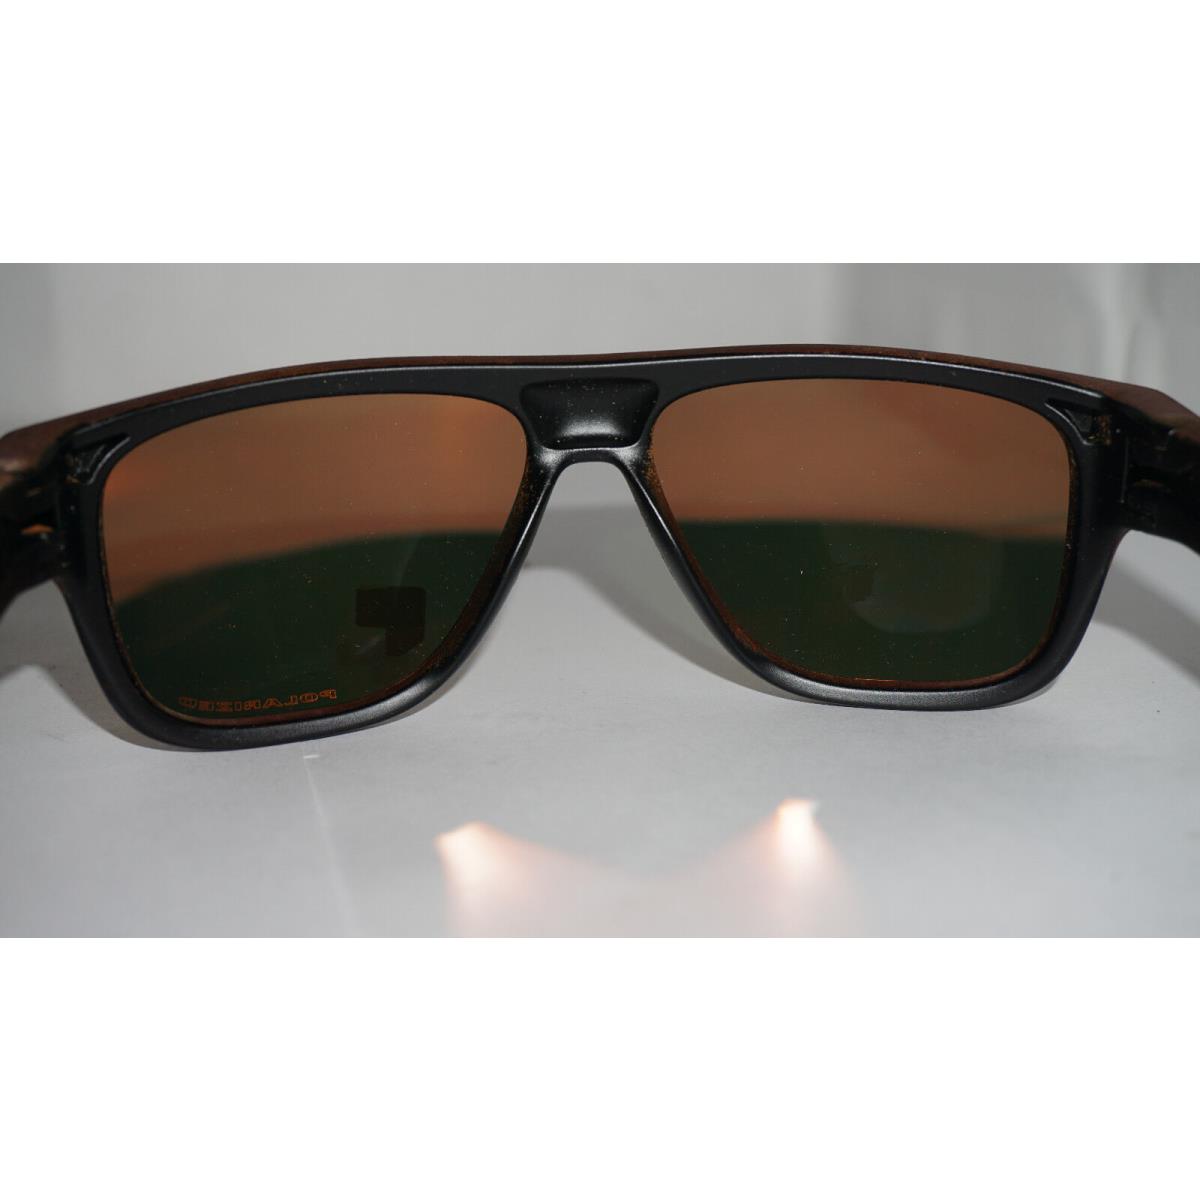 Oakley sunglasses  - Rust Decay Frame, Fire Iridium Polarized Lens 8